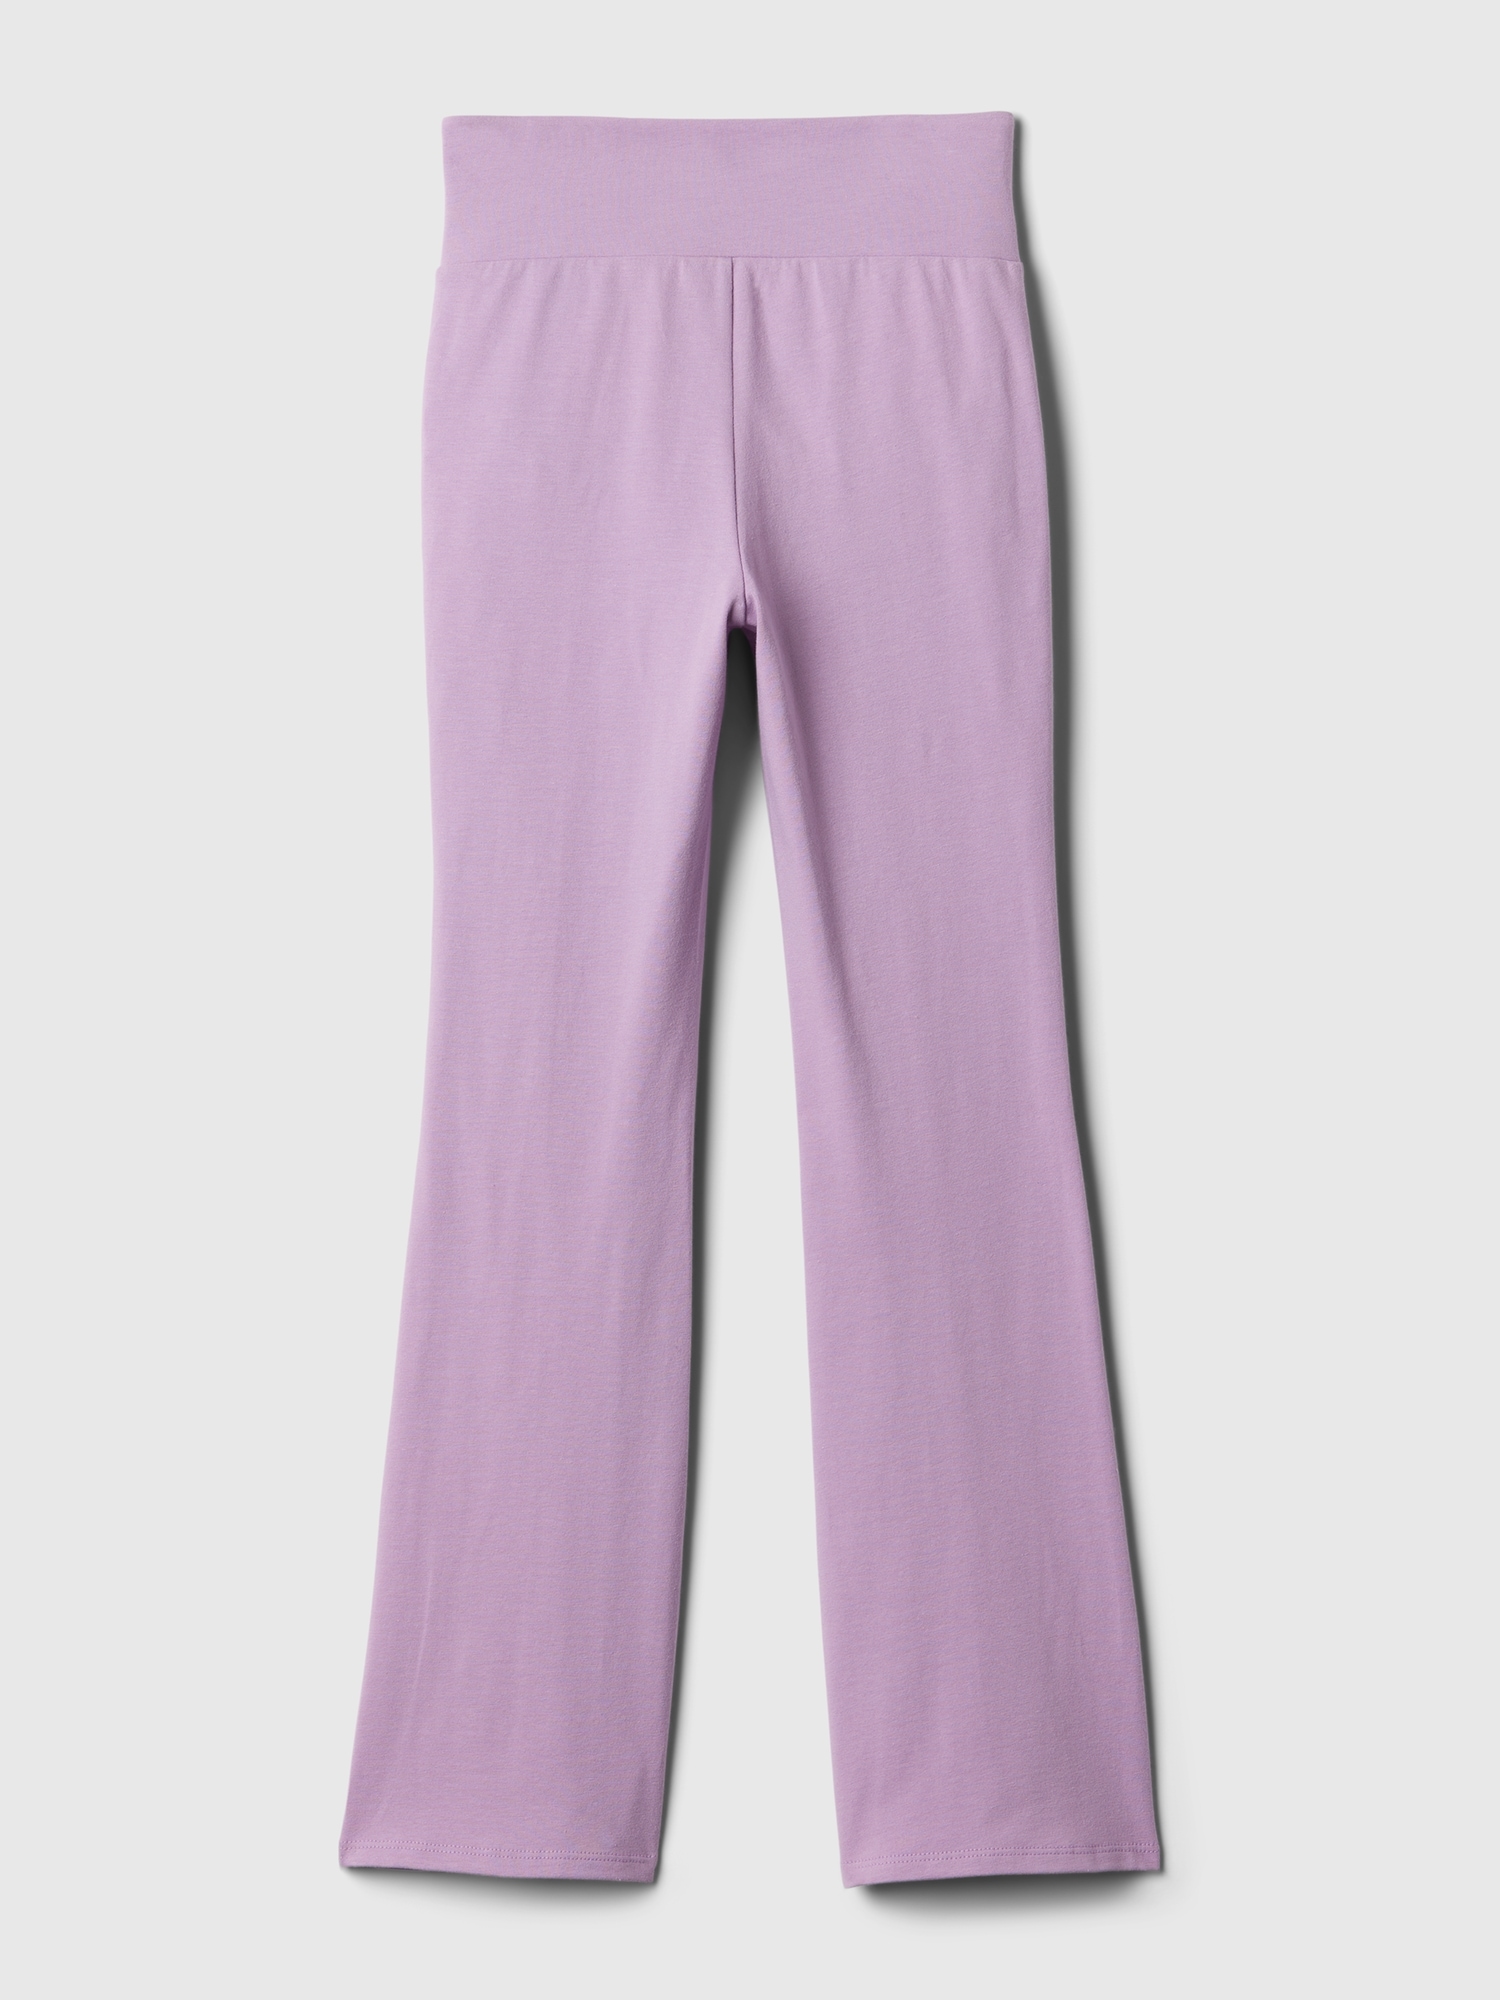 Mightly Girls Fair Trade Organic Cotton Flare Leggings Yoga Pant - Small  (6.7), Purple